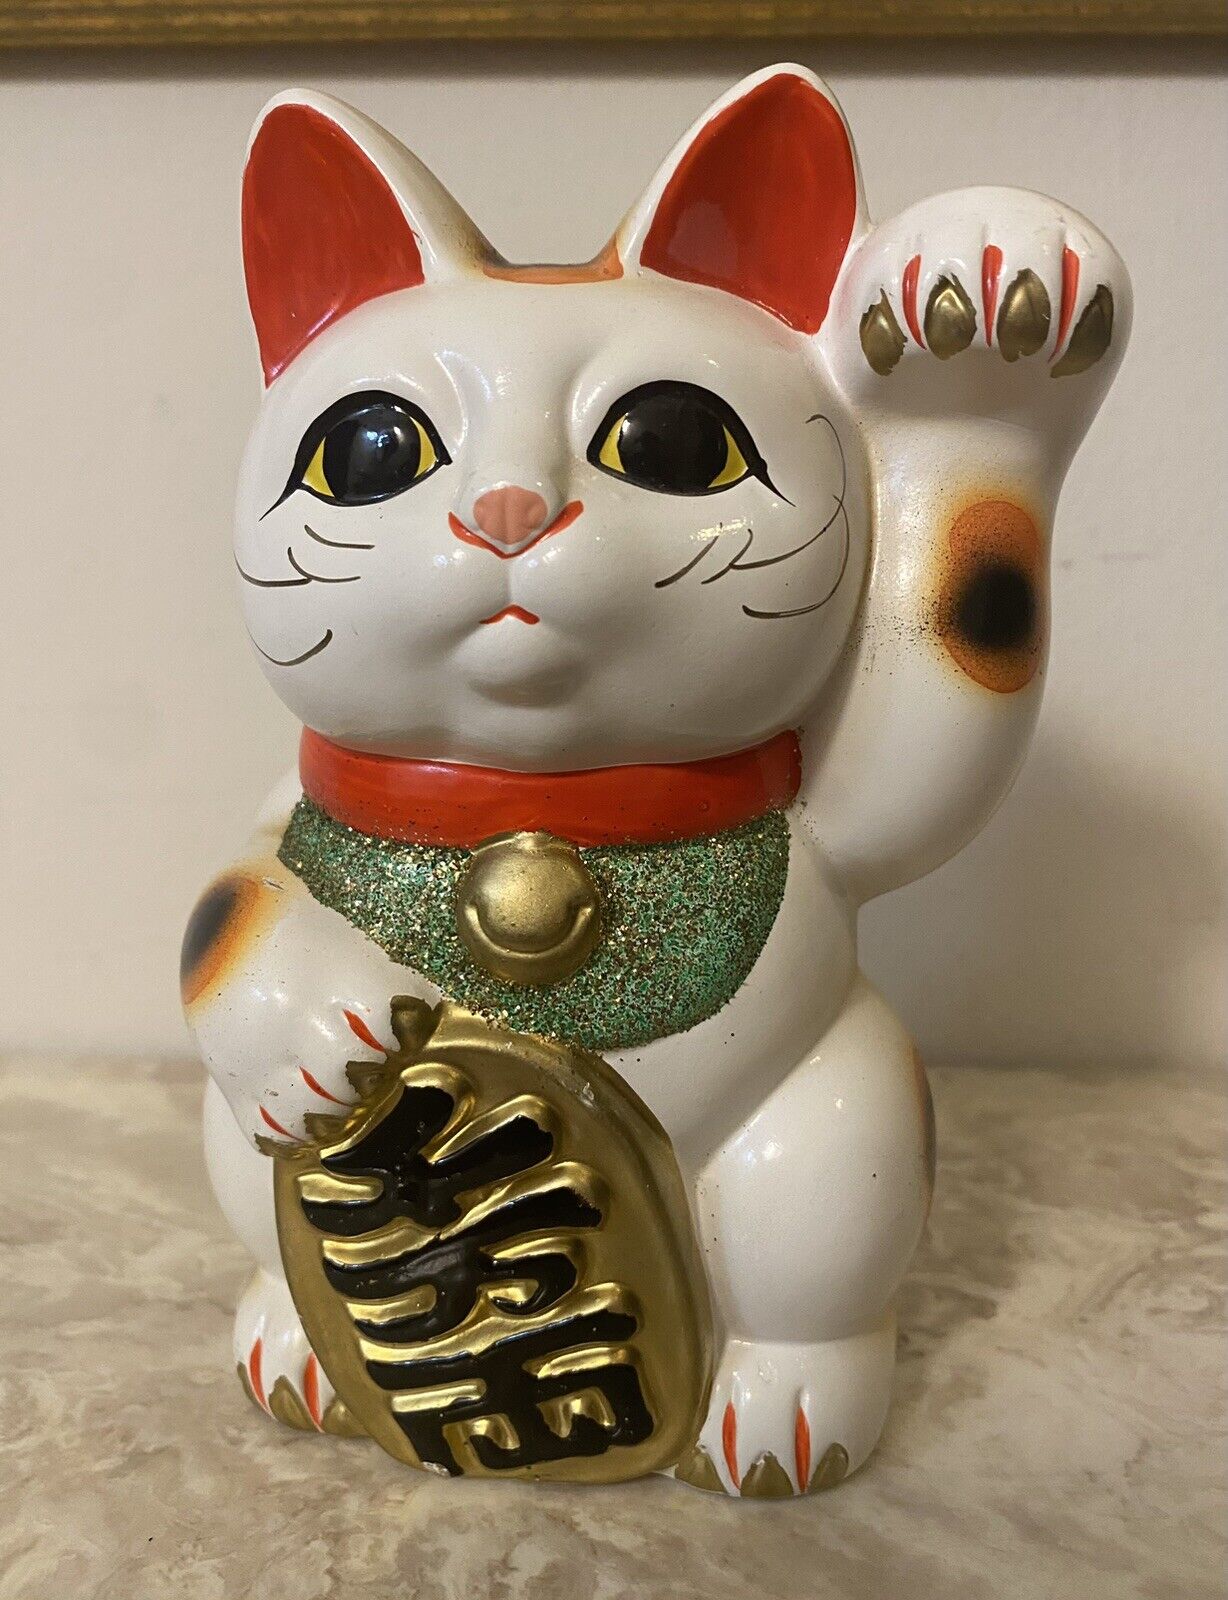 Nakagama 6” Tall Maneki Neko Good Luck Waving Cat Figurine Bank Japan